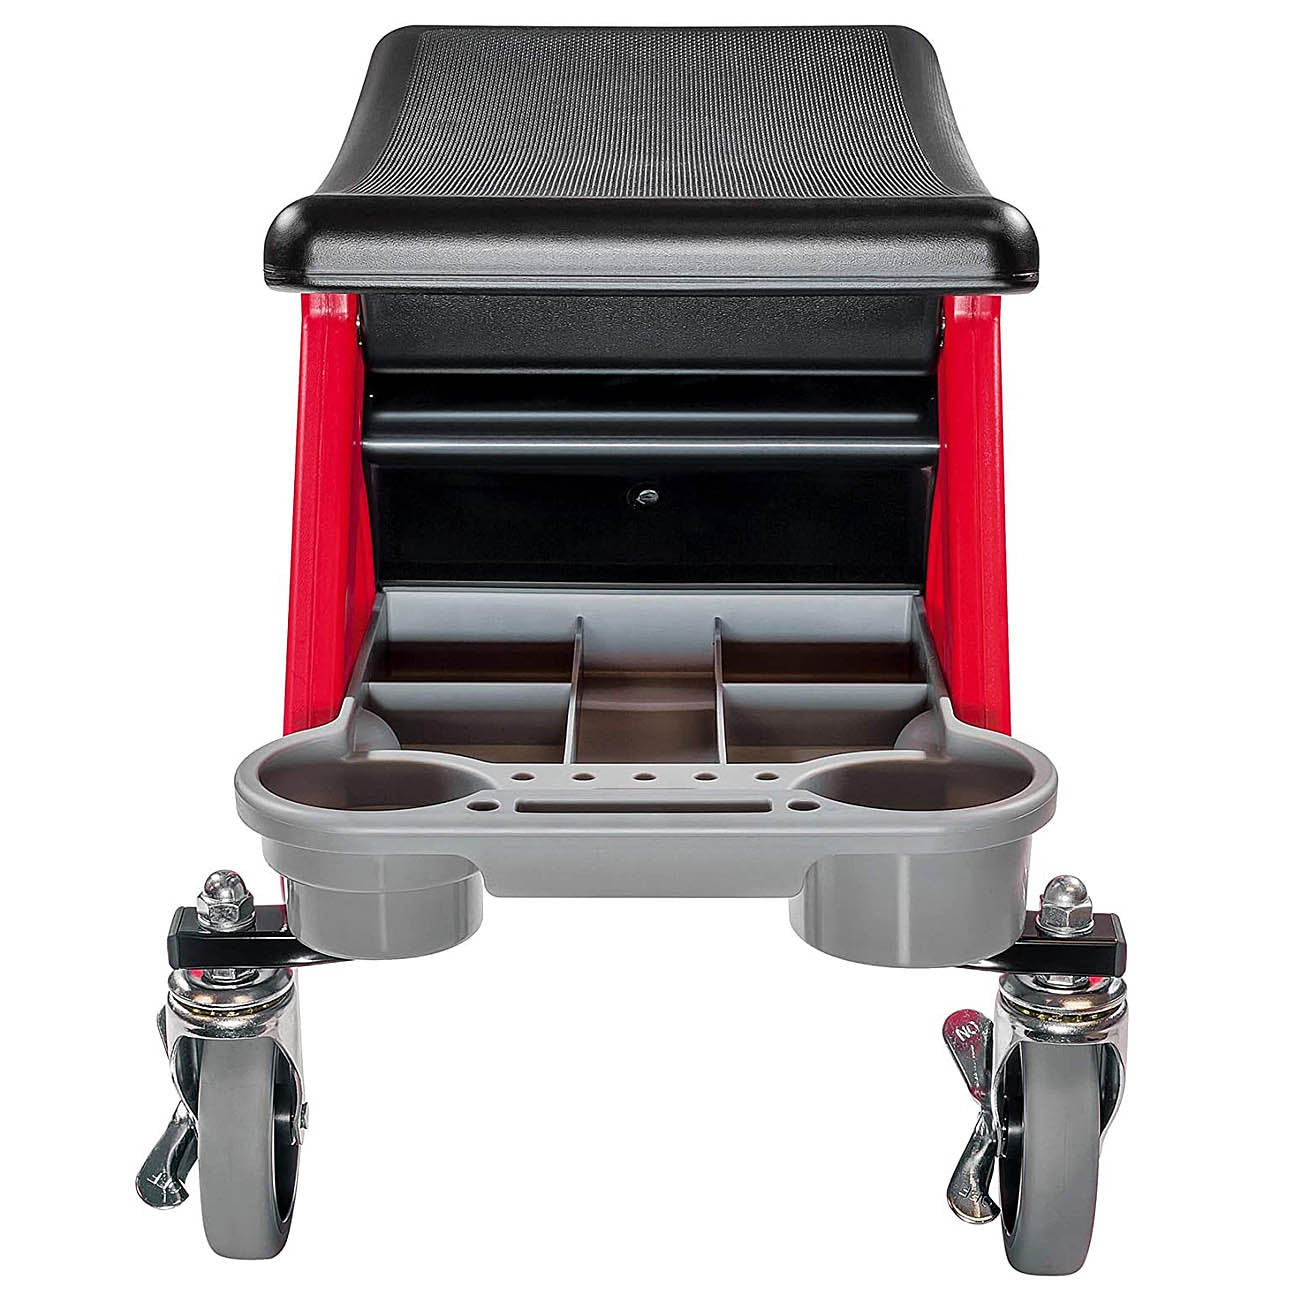 Powerbuilt 18"x10" Heavy Duty Rolling Garage Work Seat with Storage Trays 240036